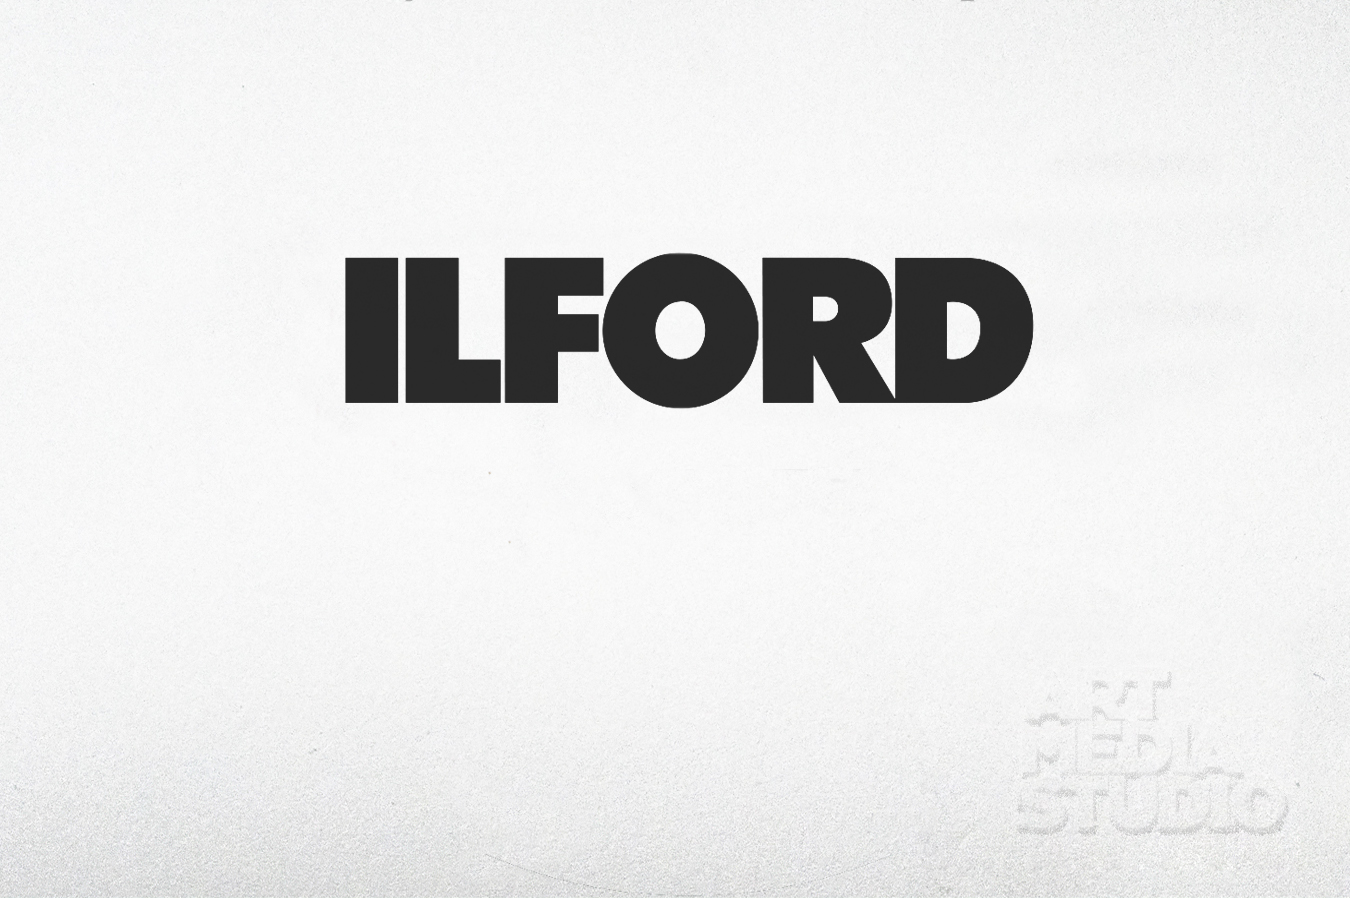 Ilford Certified Printer Partner